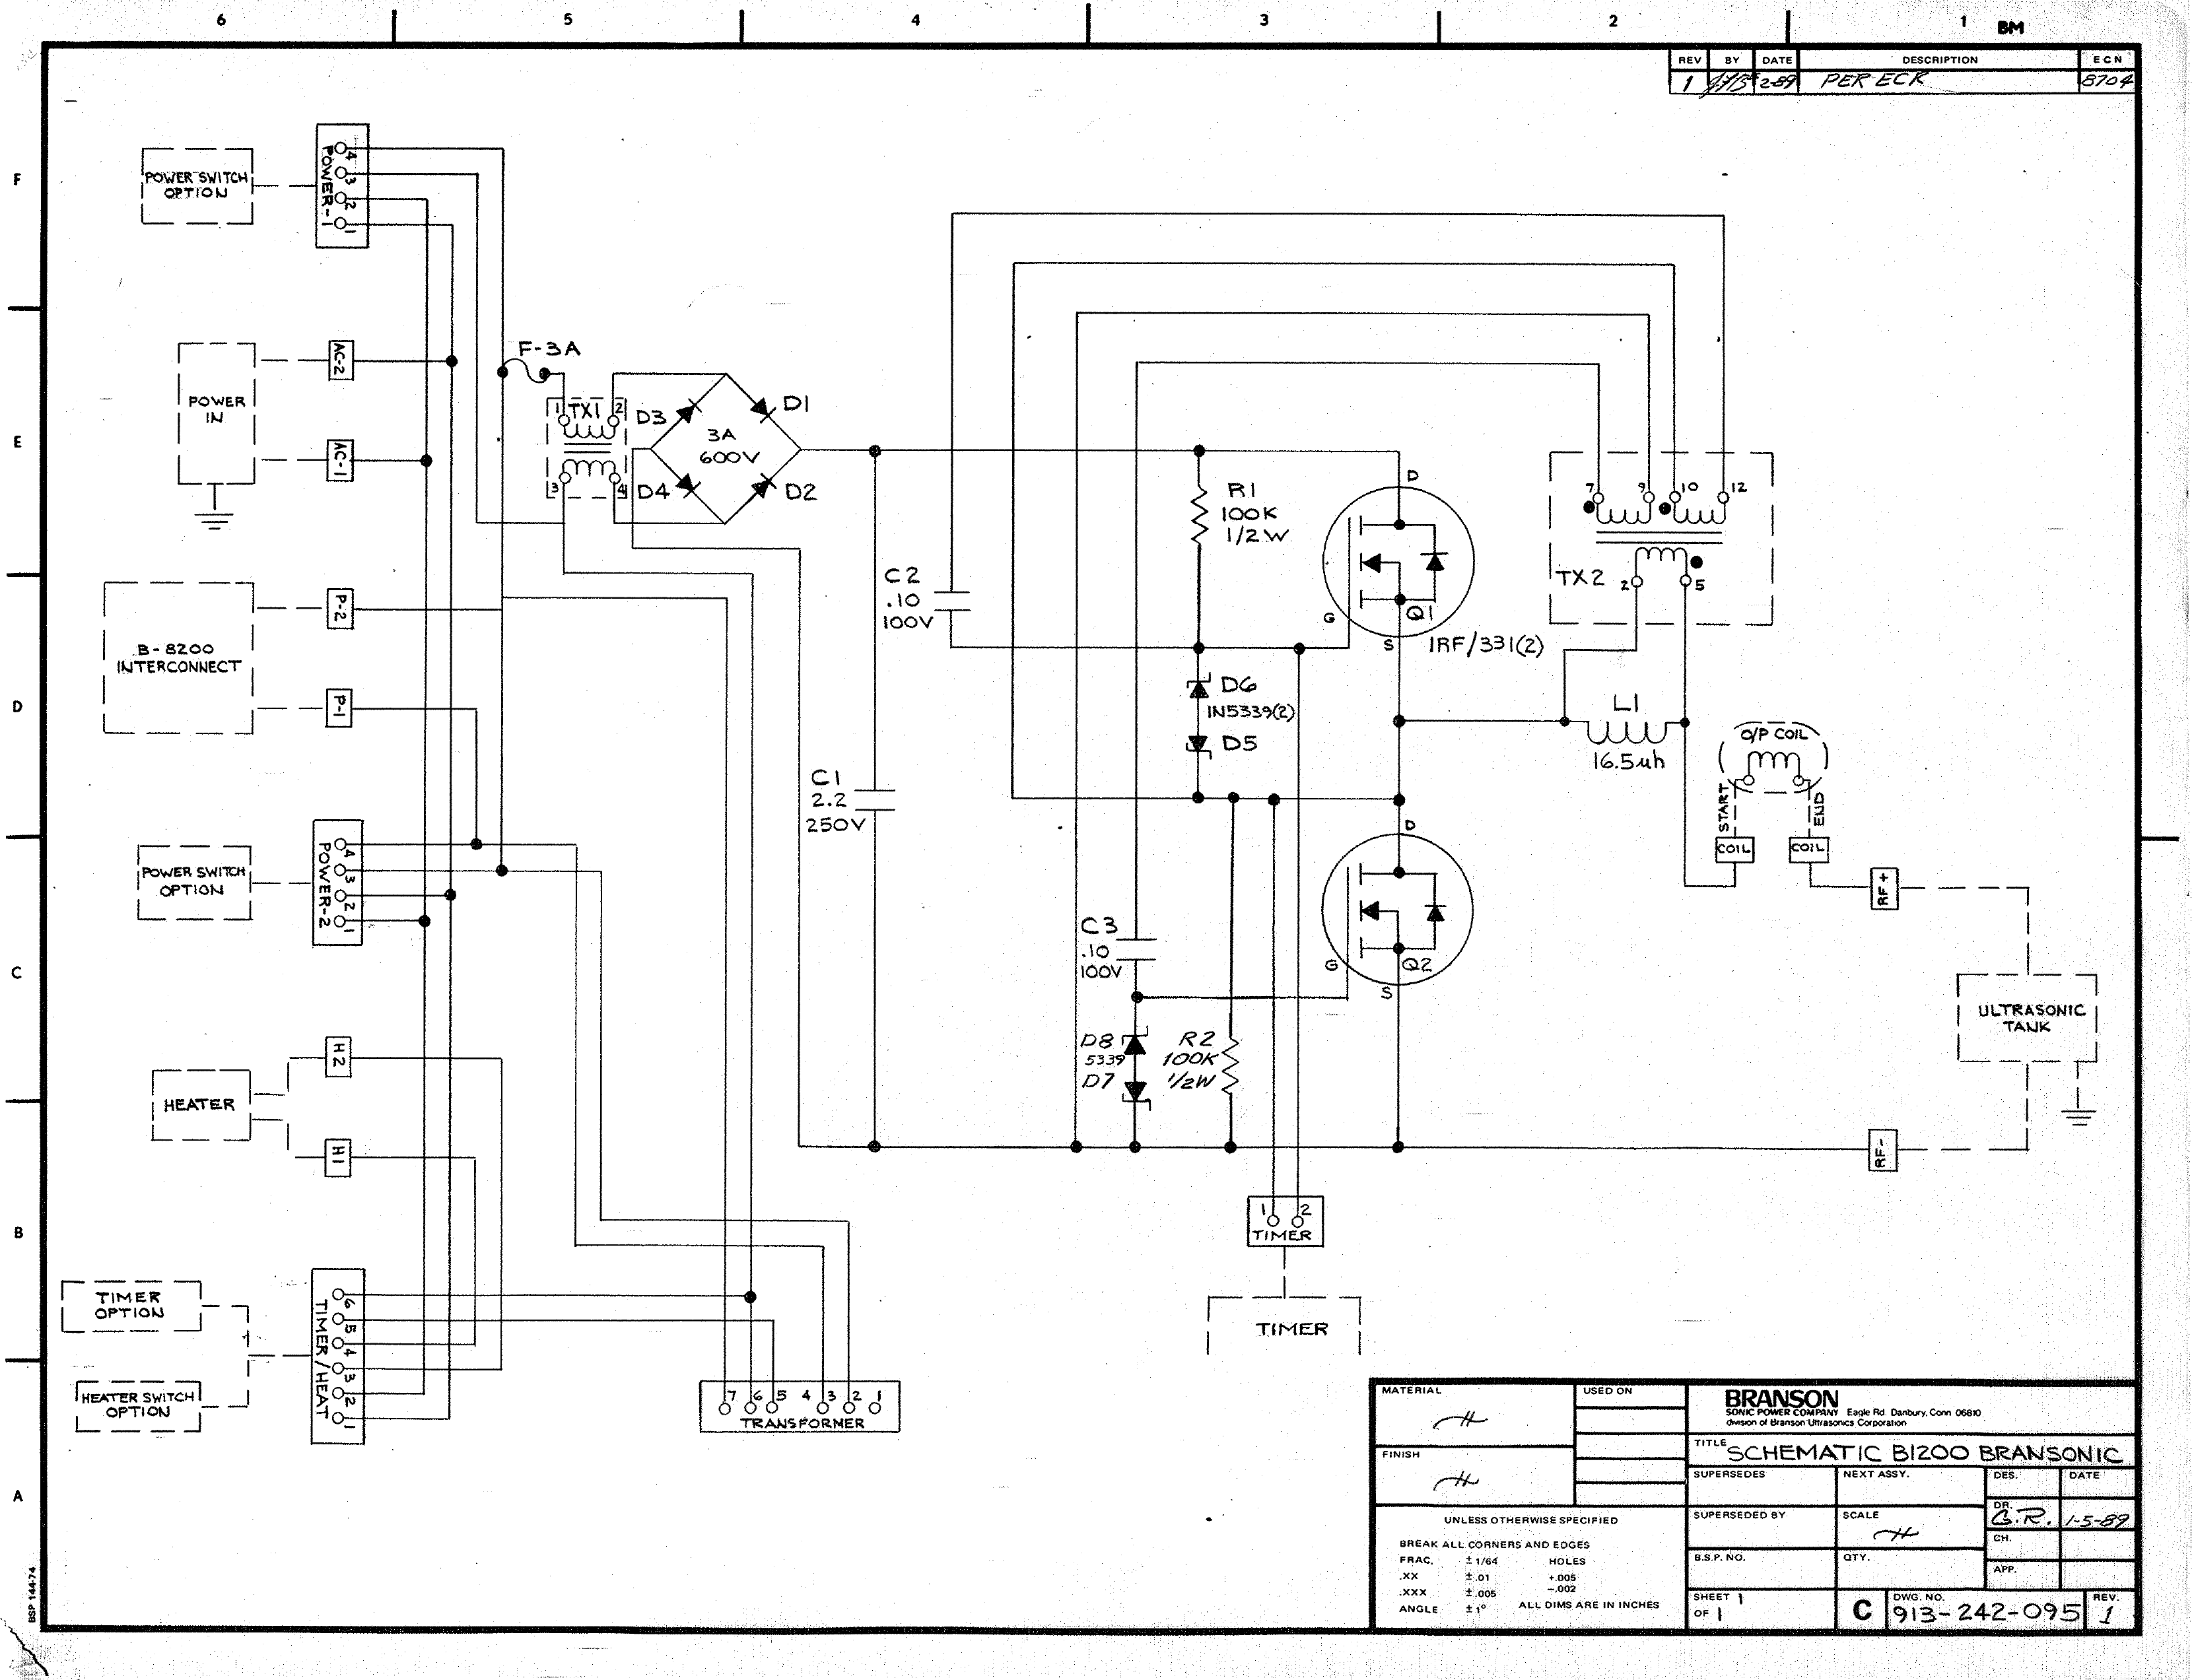 Page 1 of 1 - Branson-Ultrasound-Transducer-Schematic